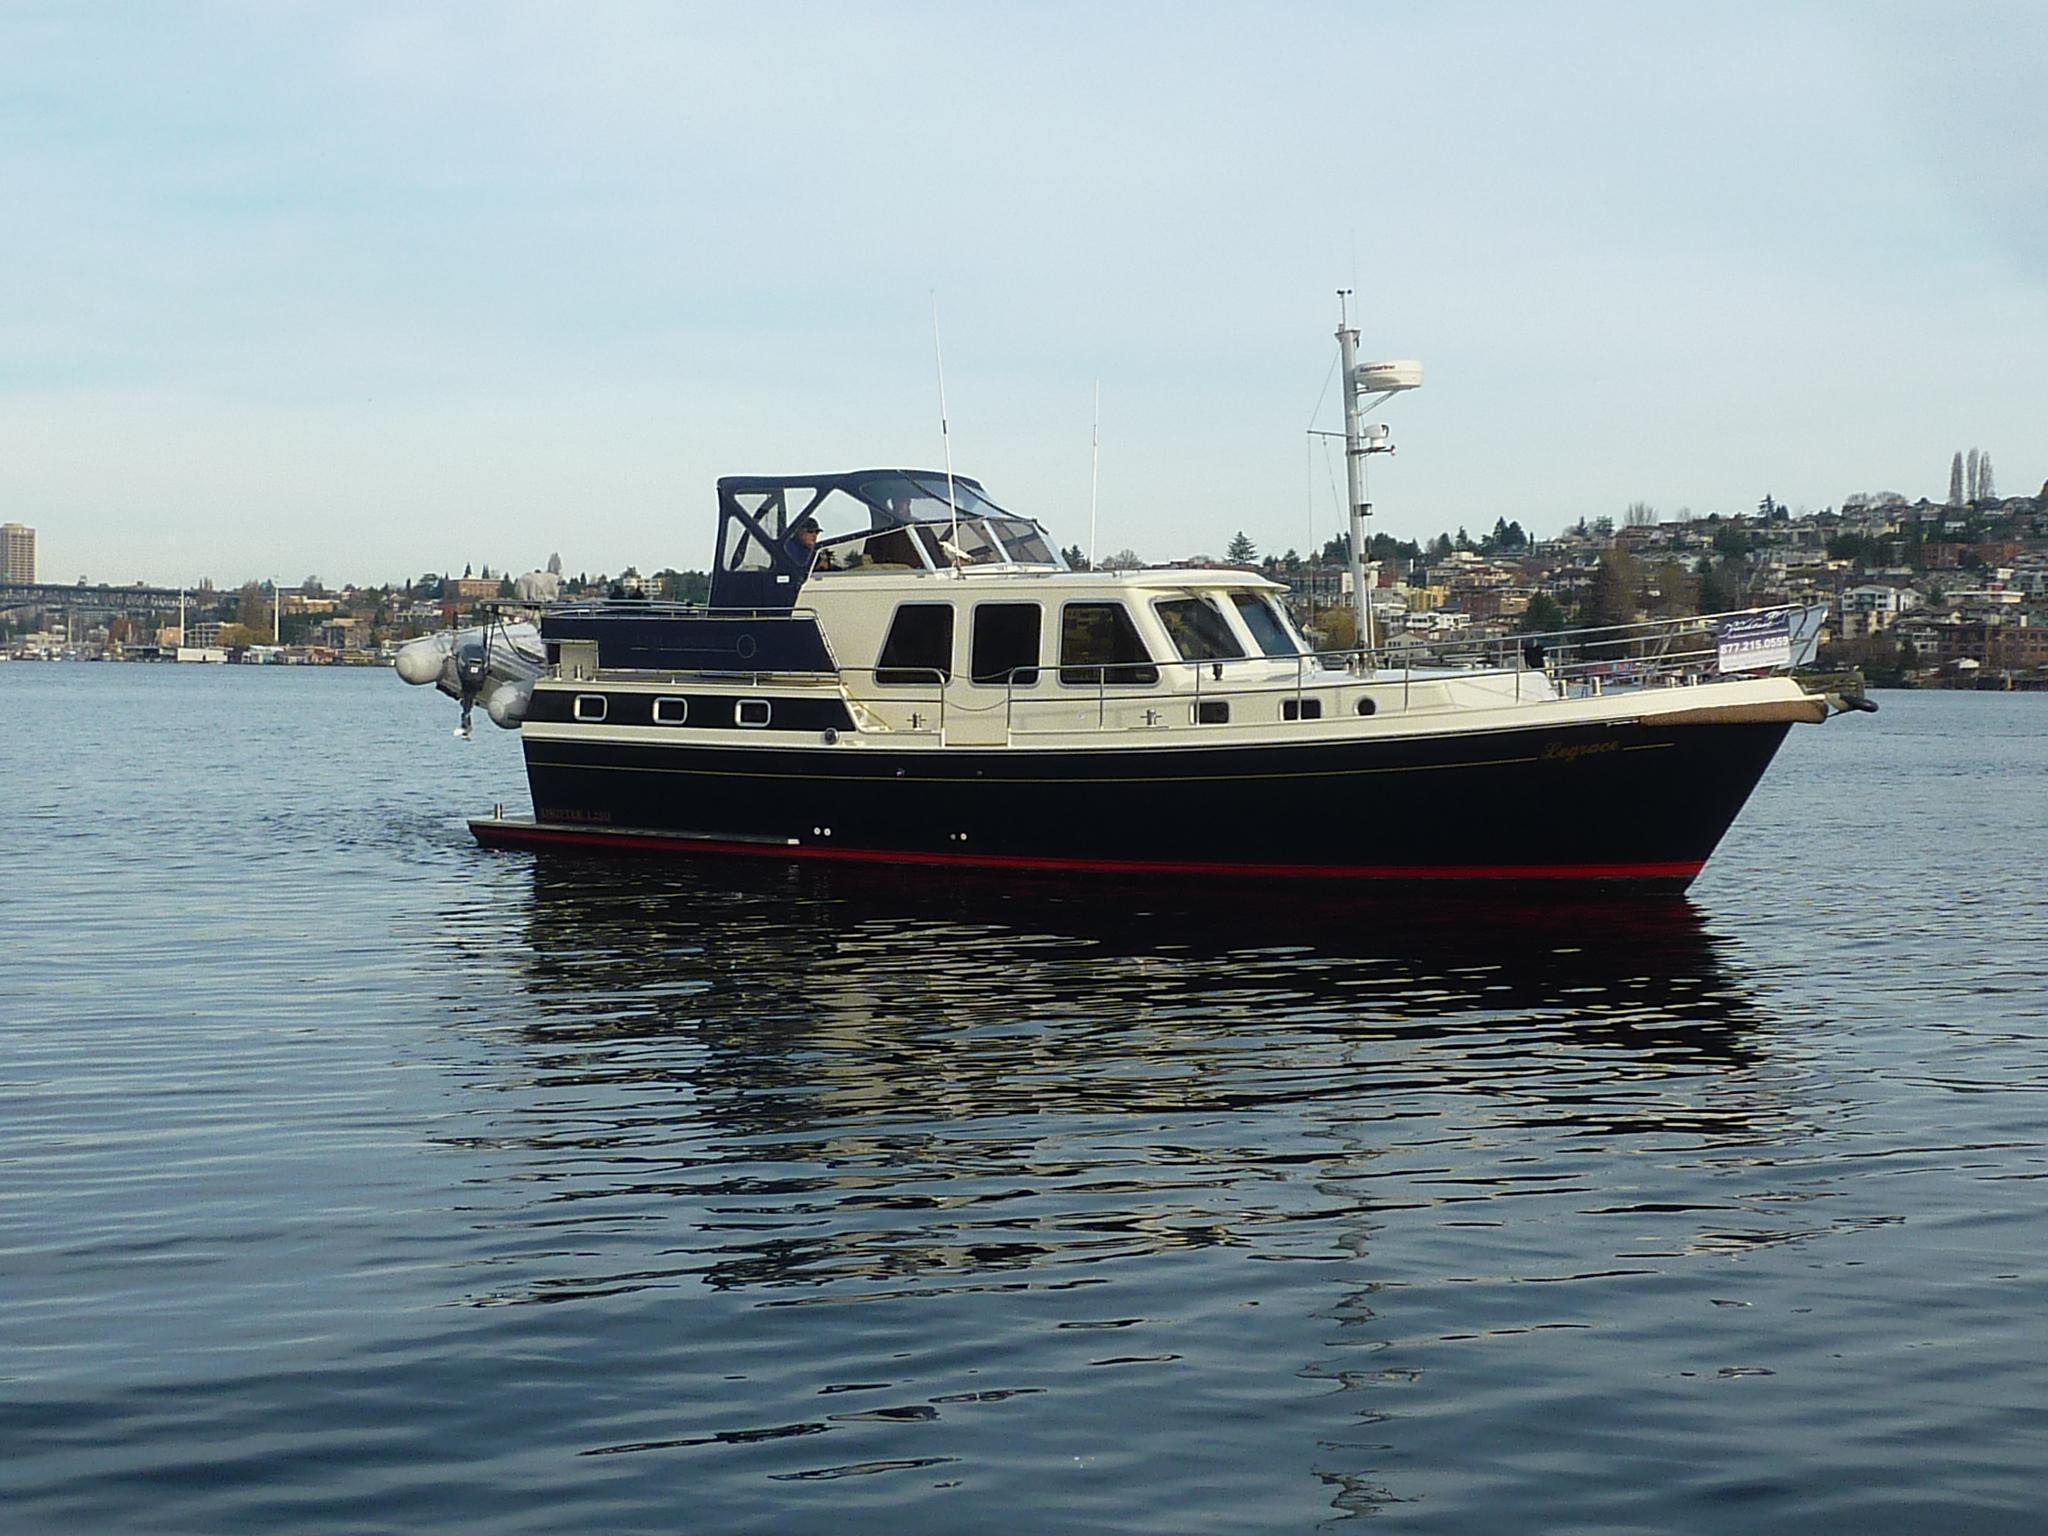 Aquanaut Drifter 1250 AK, Seattle, Our Docks